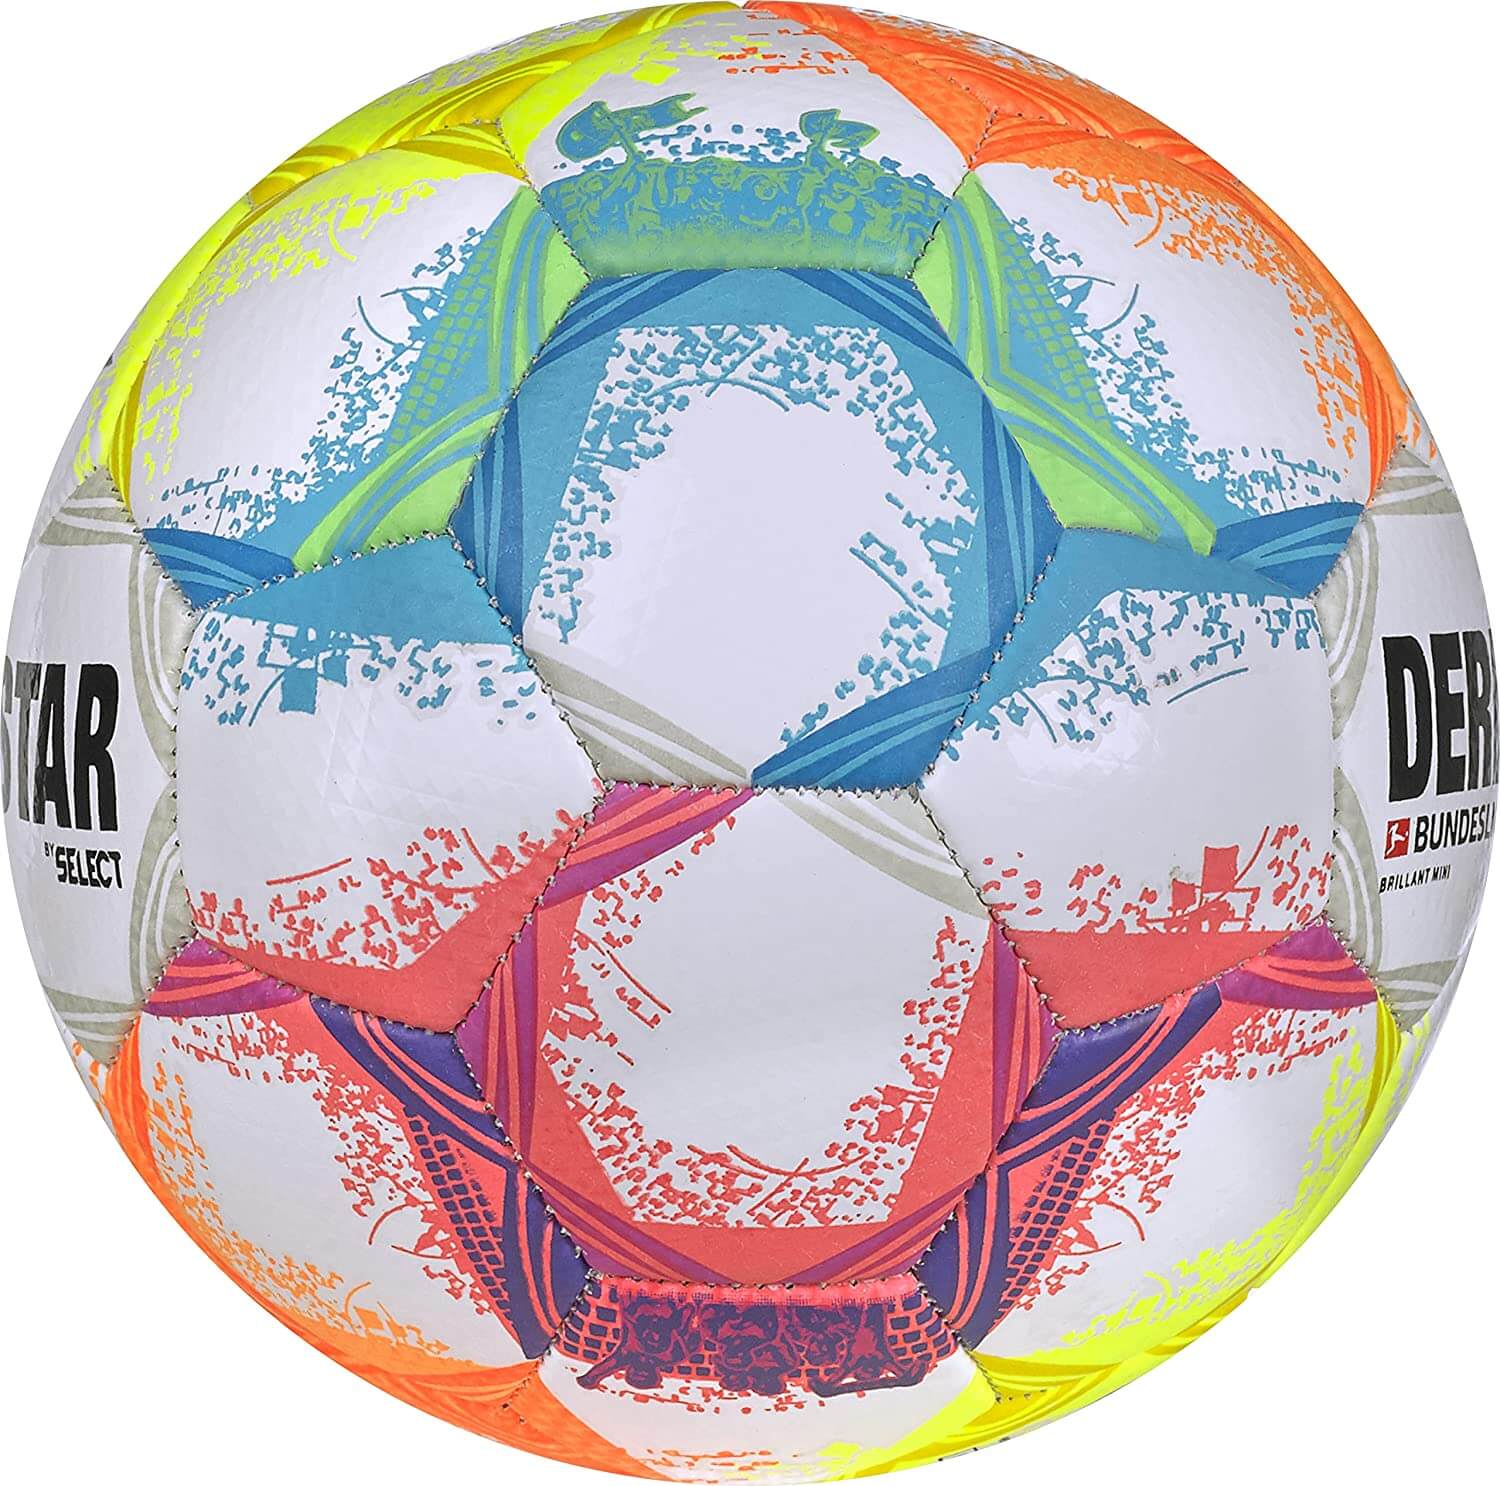 Select 2022-23 Derbystar Bundesliga Mini Ball - White-Multicolor (Back)